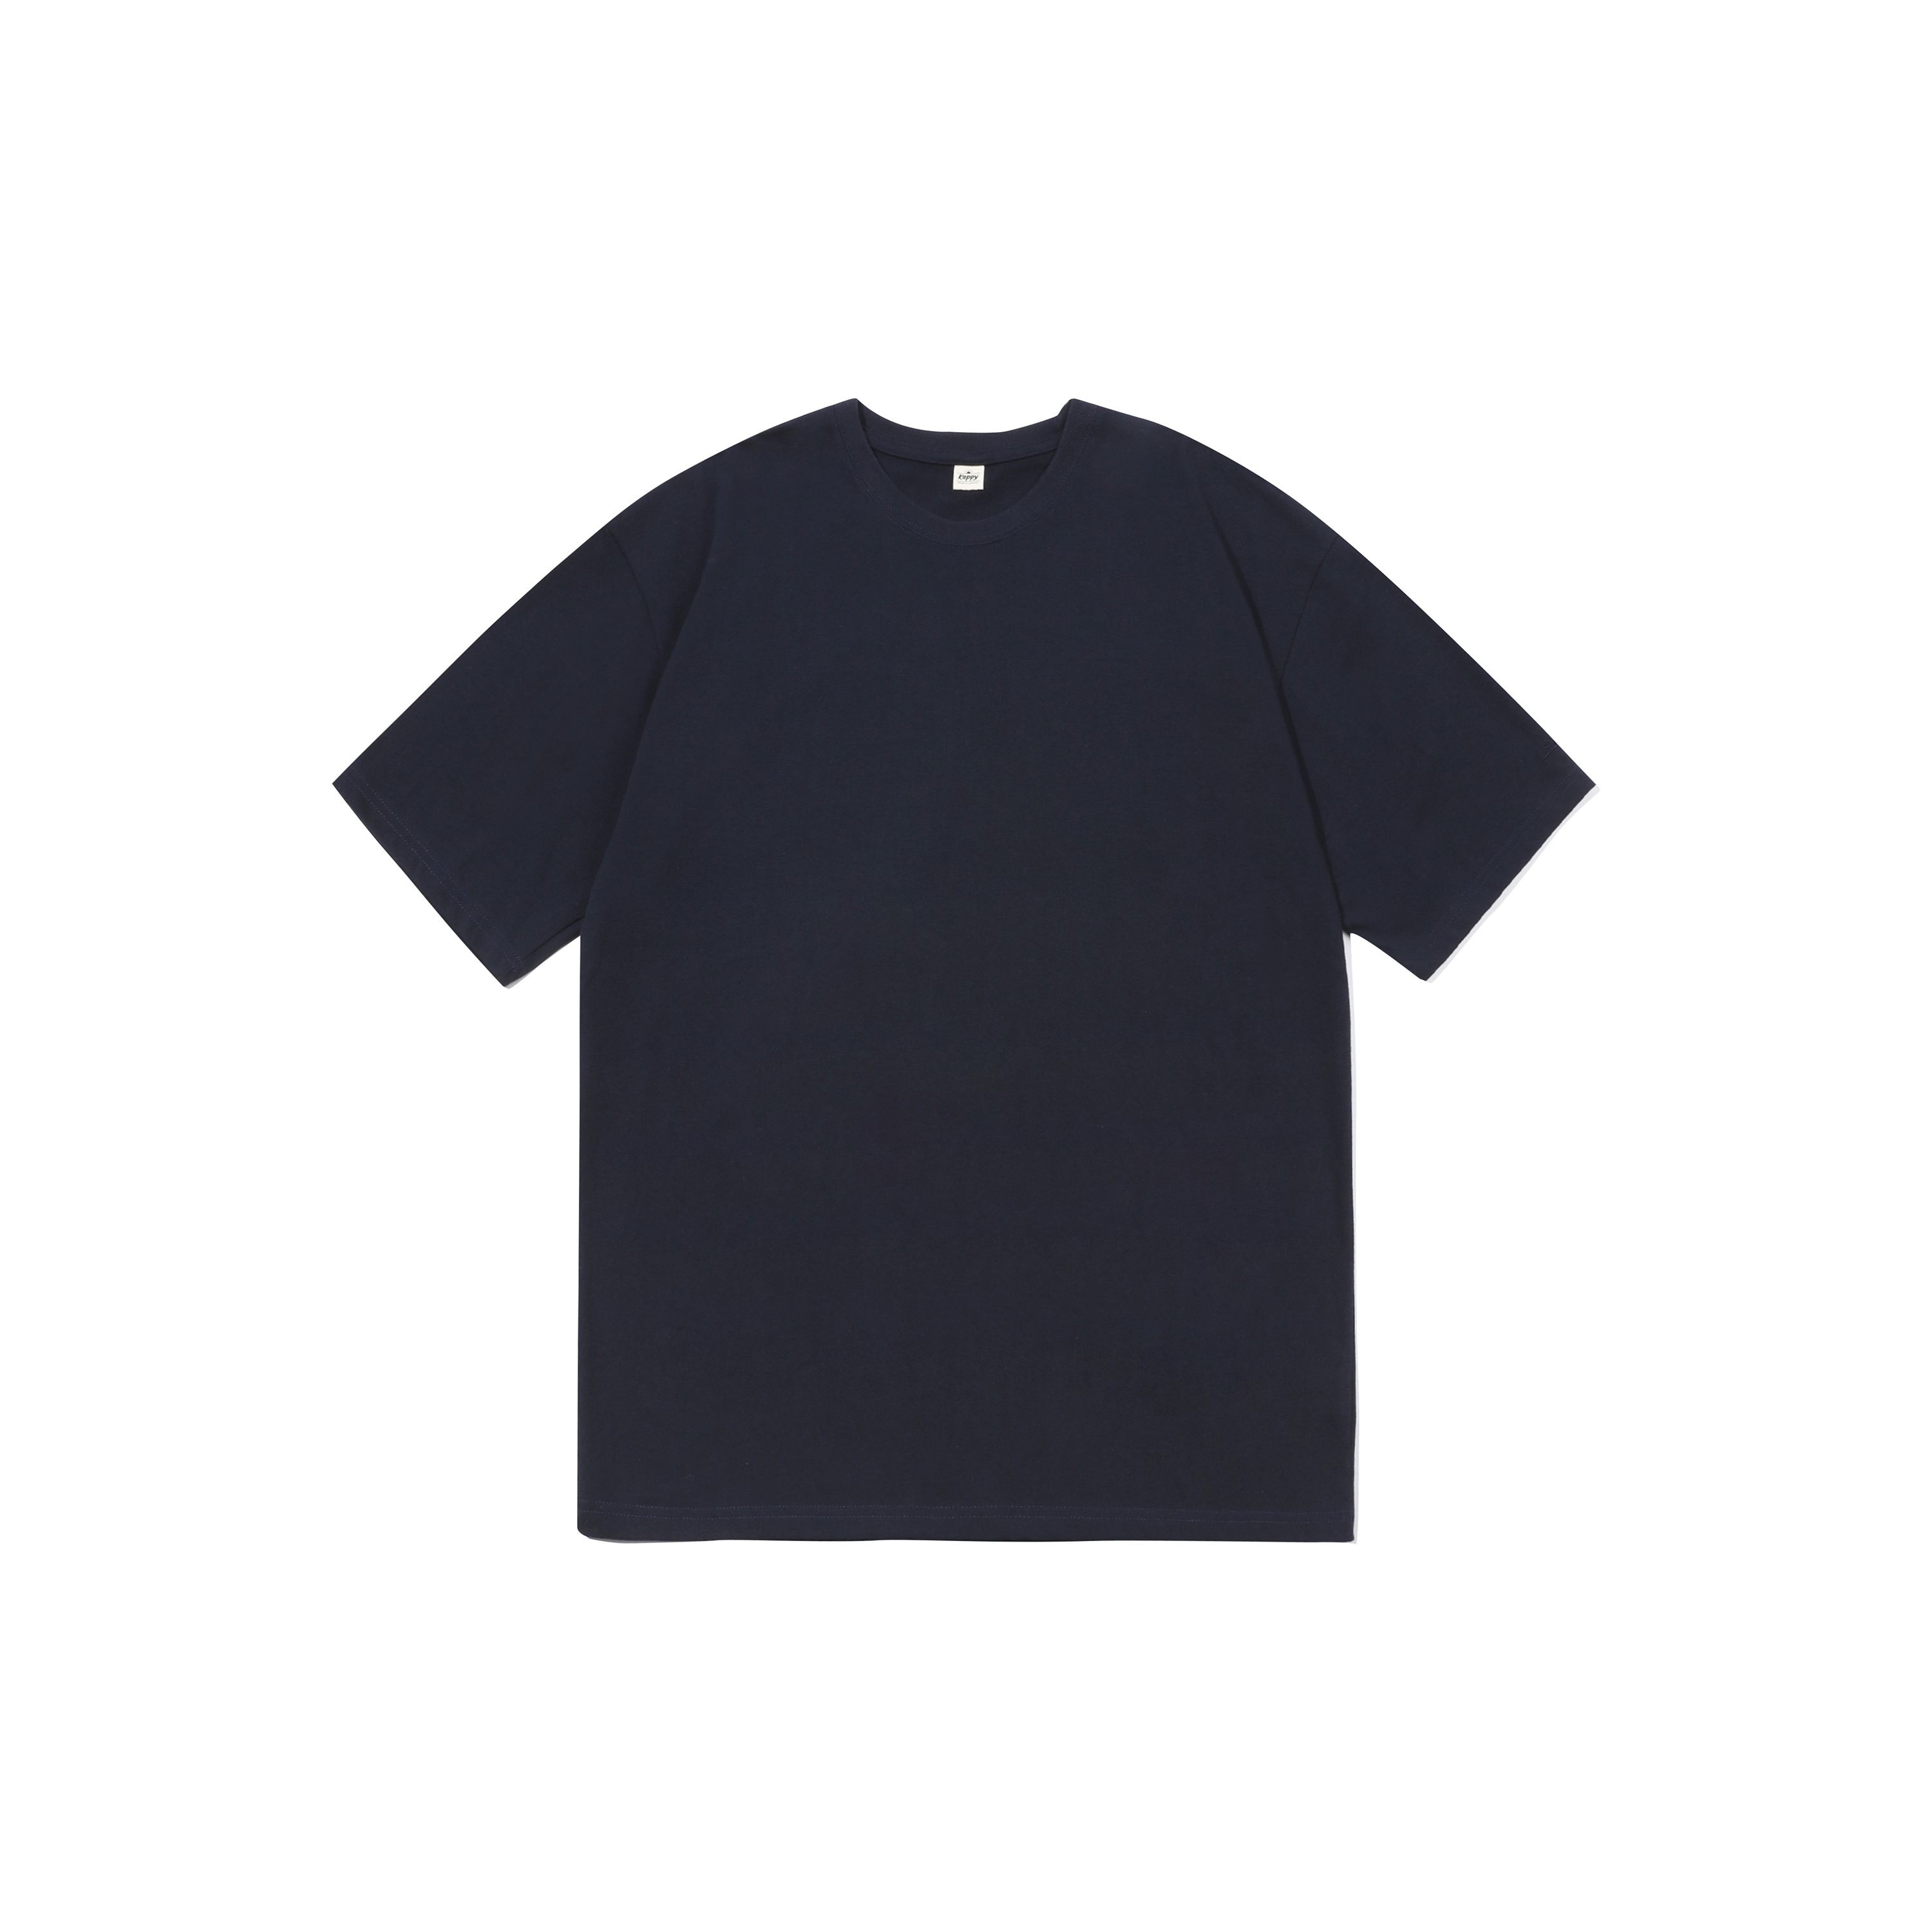 Kappy plain t-shirt navy